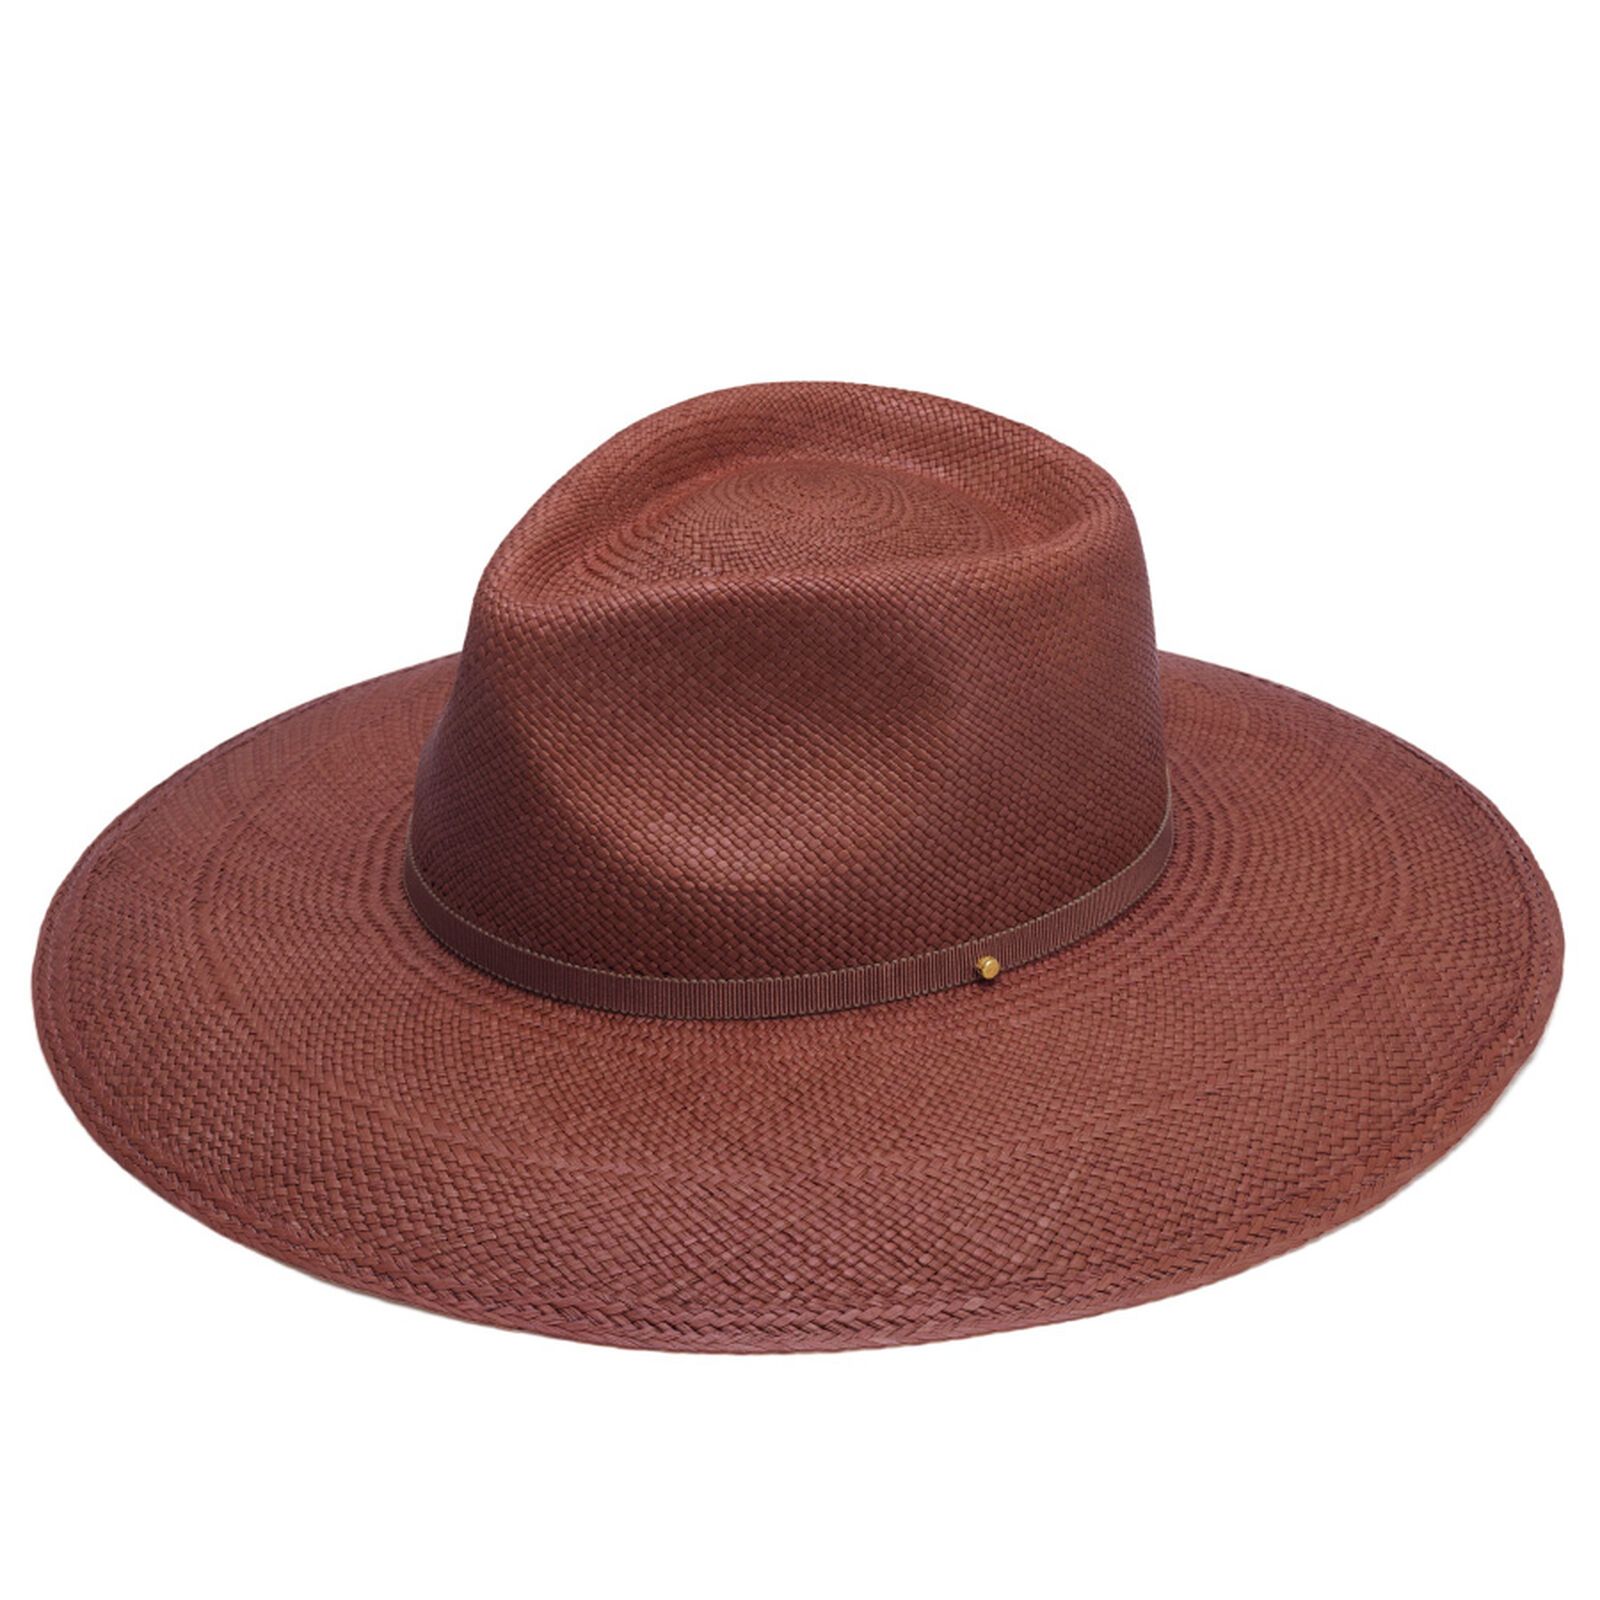 Wide Brim Panama* Hat | Cuyana